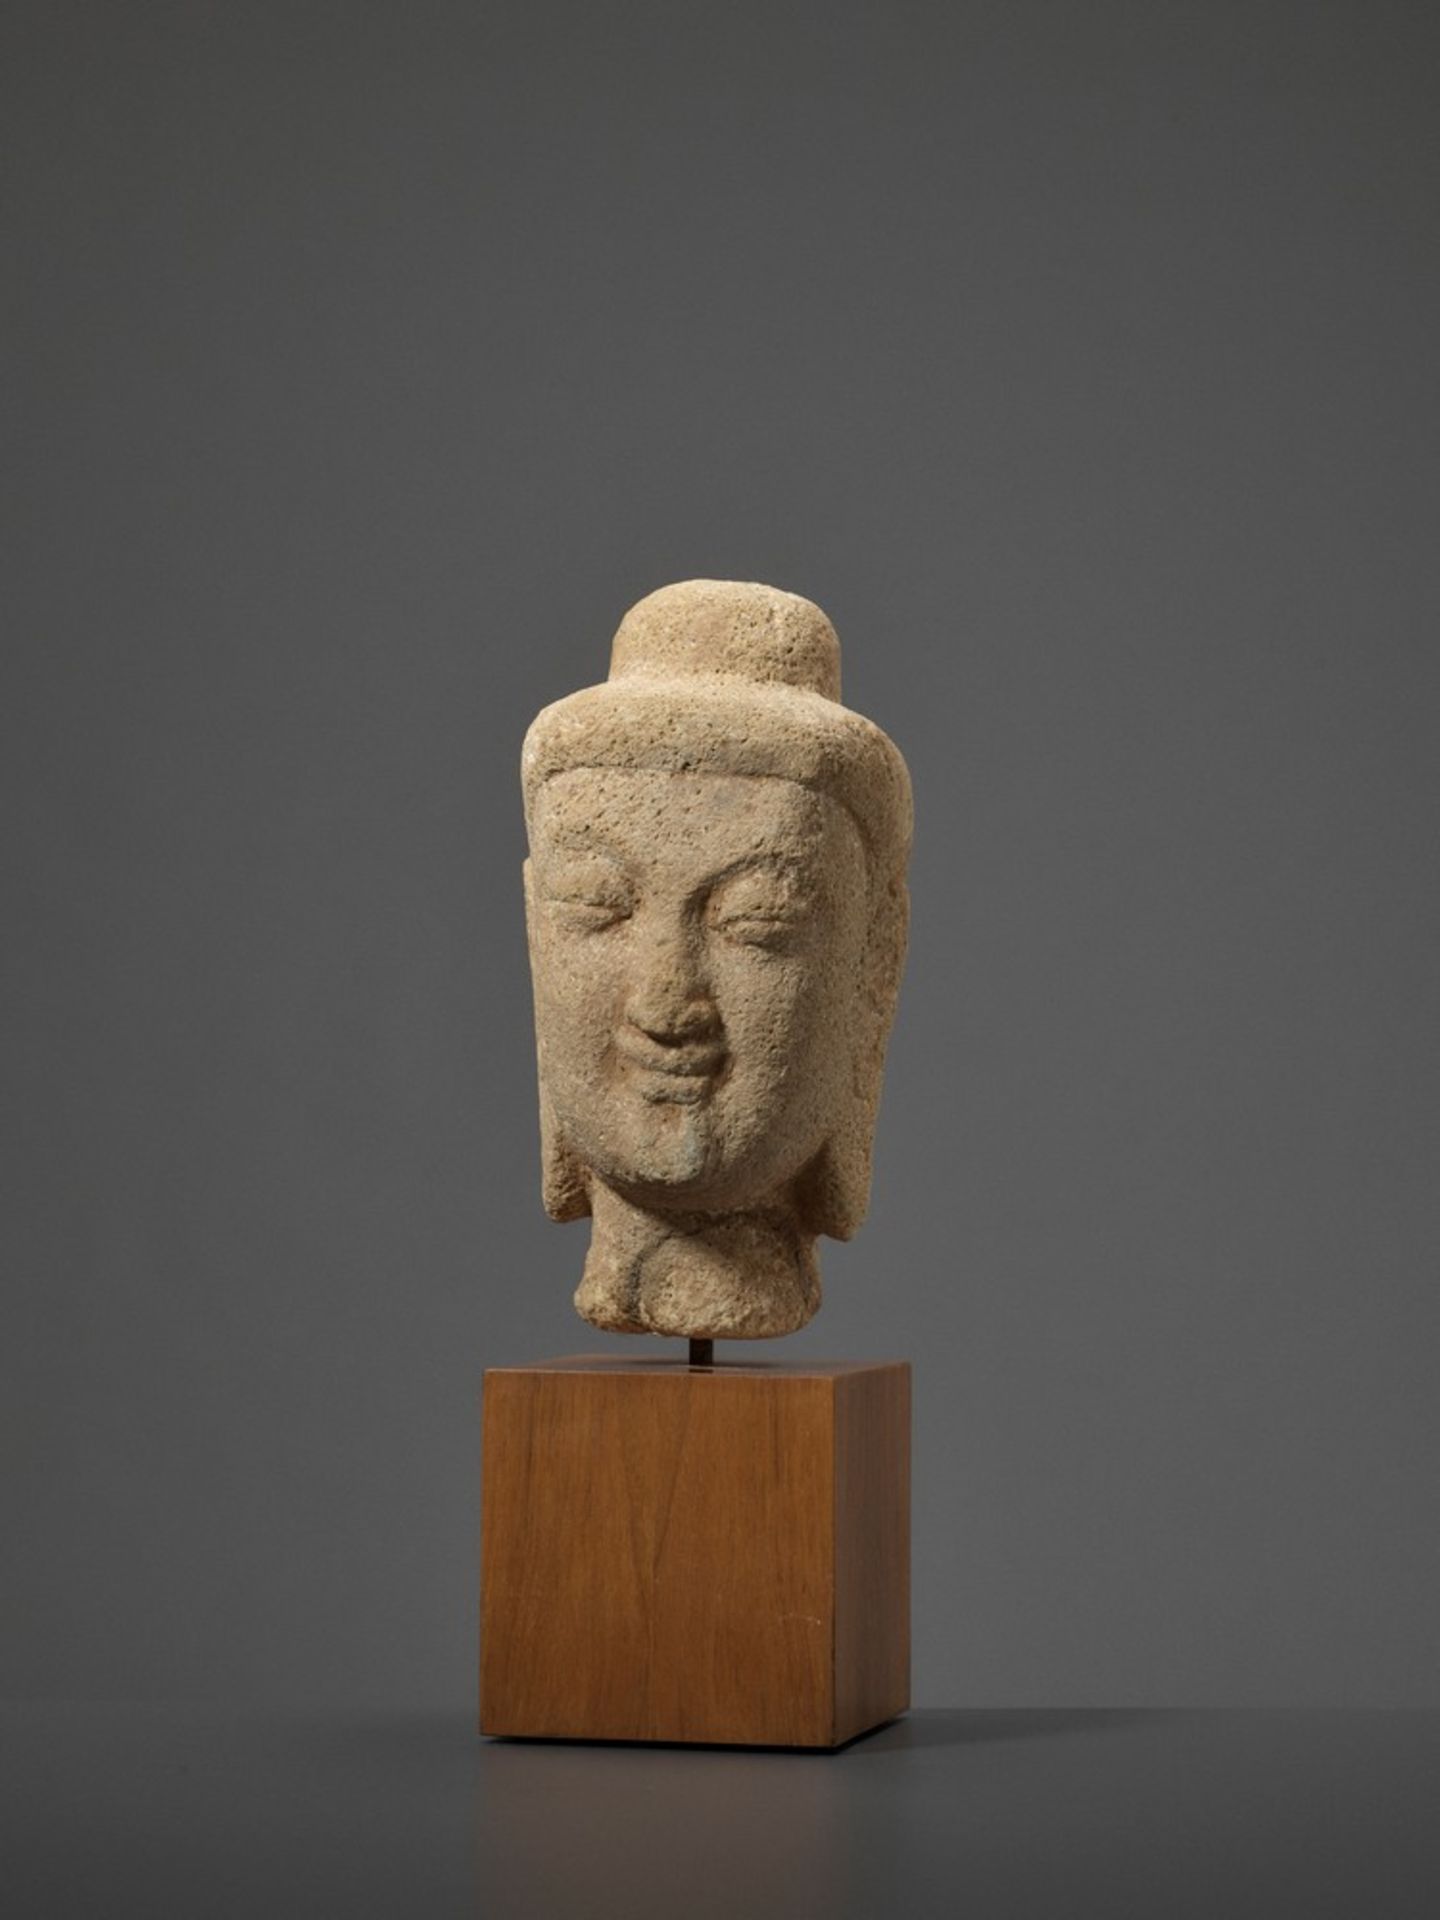 A RARE SANDSTONE HEAD OF BUDDHA, NORTHERN WEI DYNASTY, 5TH-6TH CENTURY